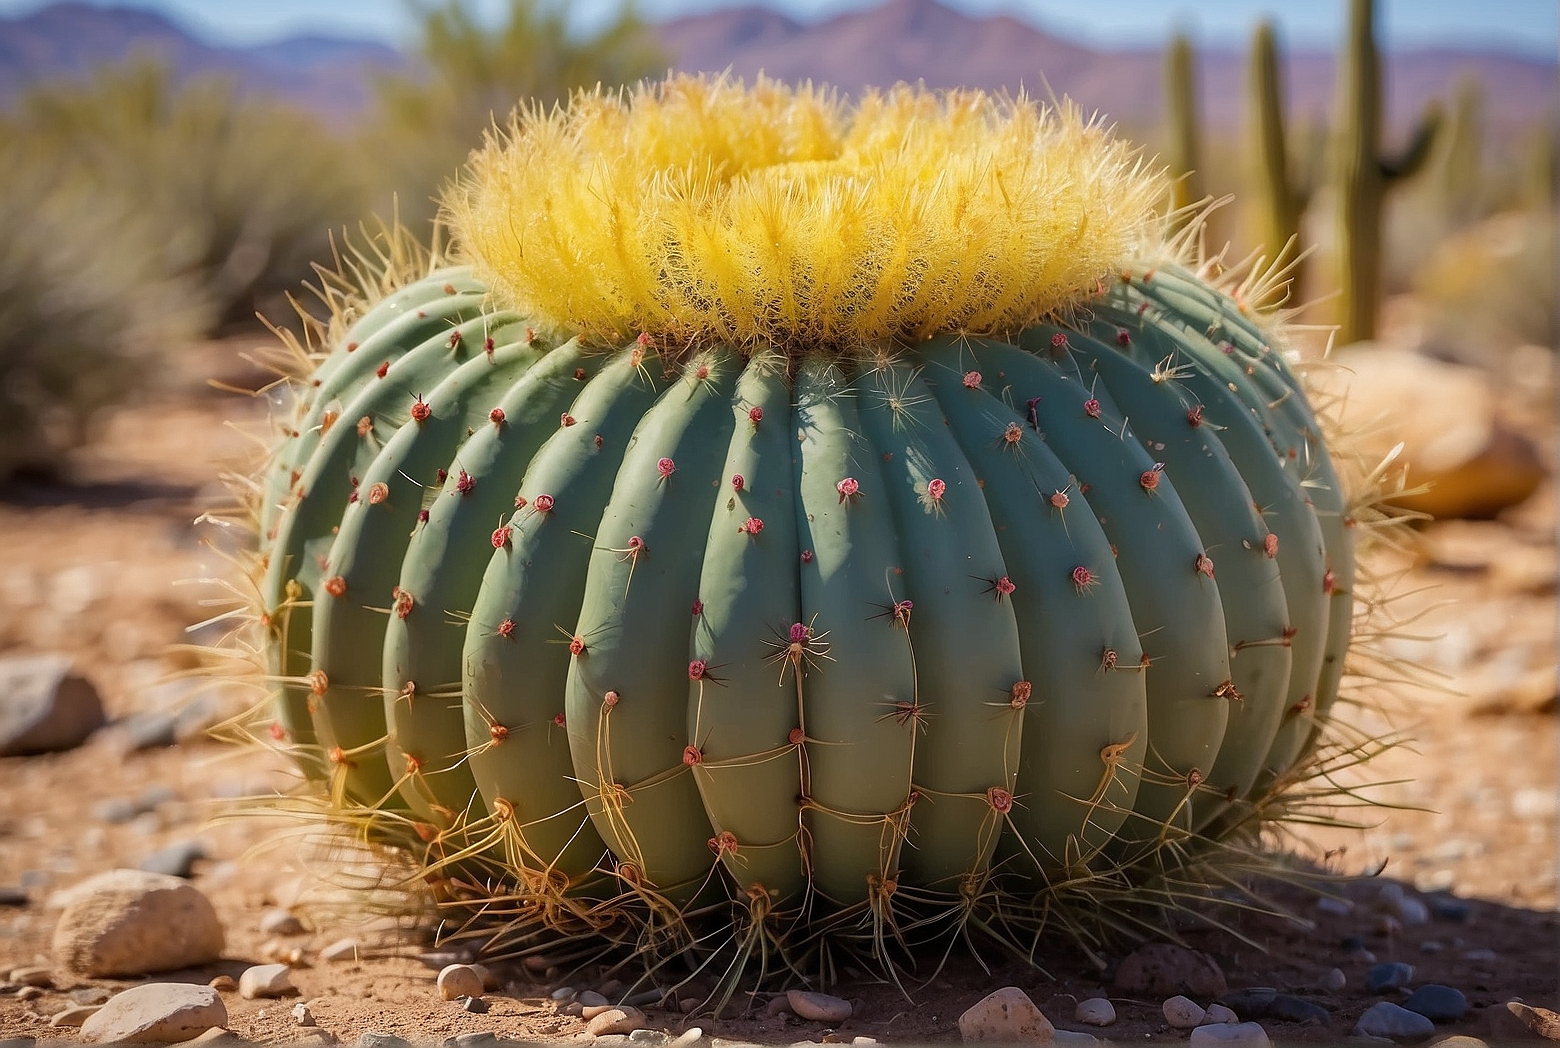 The Amazing Lemon Barrel Cactus